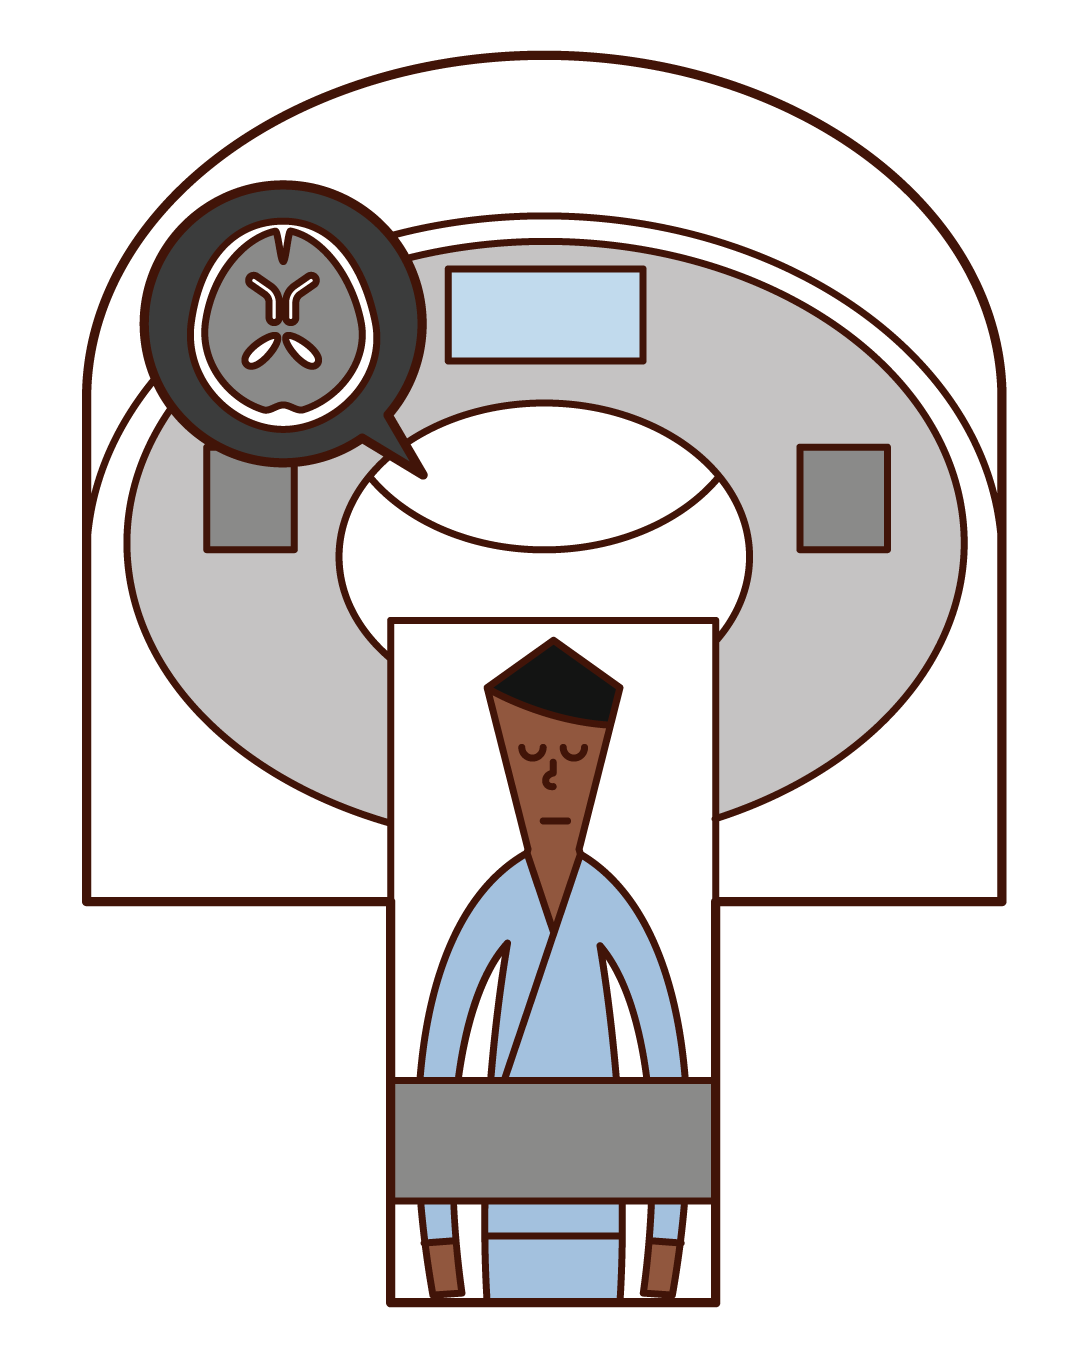 MRI 및 CT 검사를 받은 사람(남성)의 그림입니다